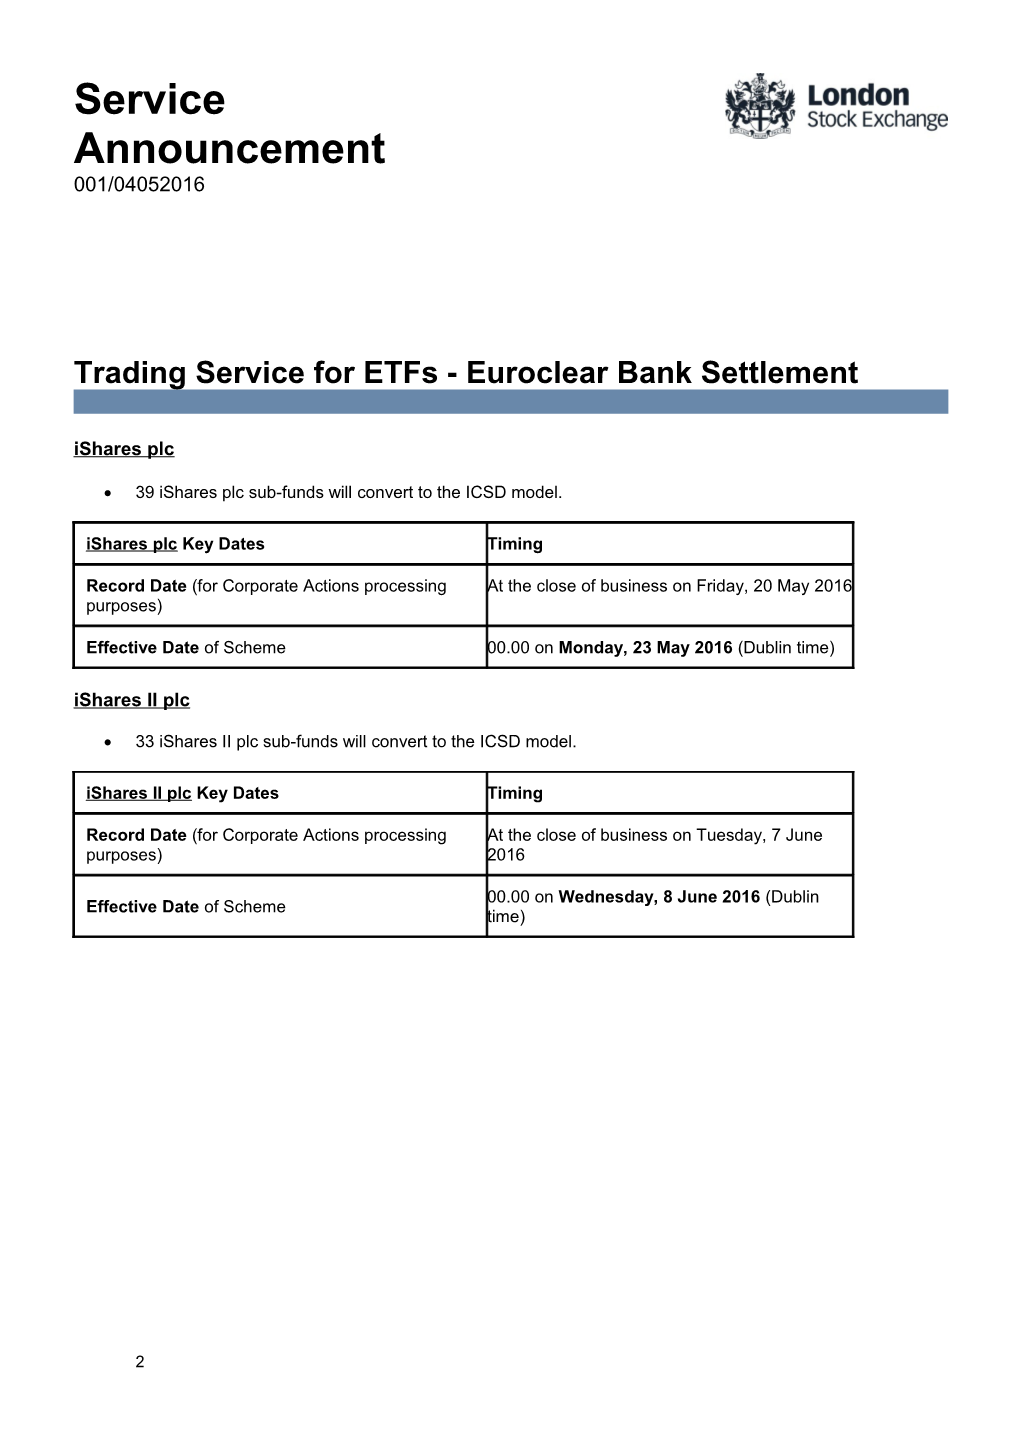 Trading Service for Etfs - Euroclear Bank Settlement Segments s1